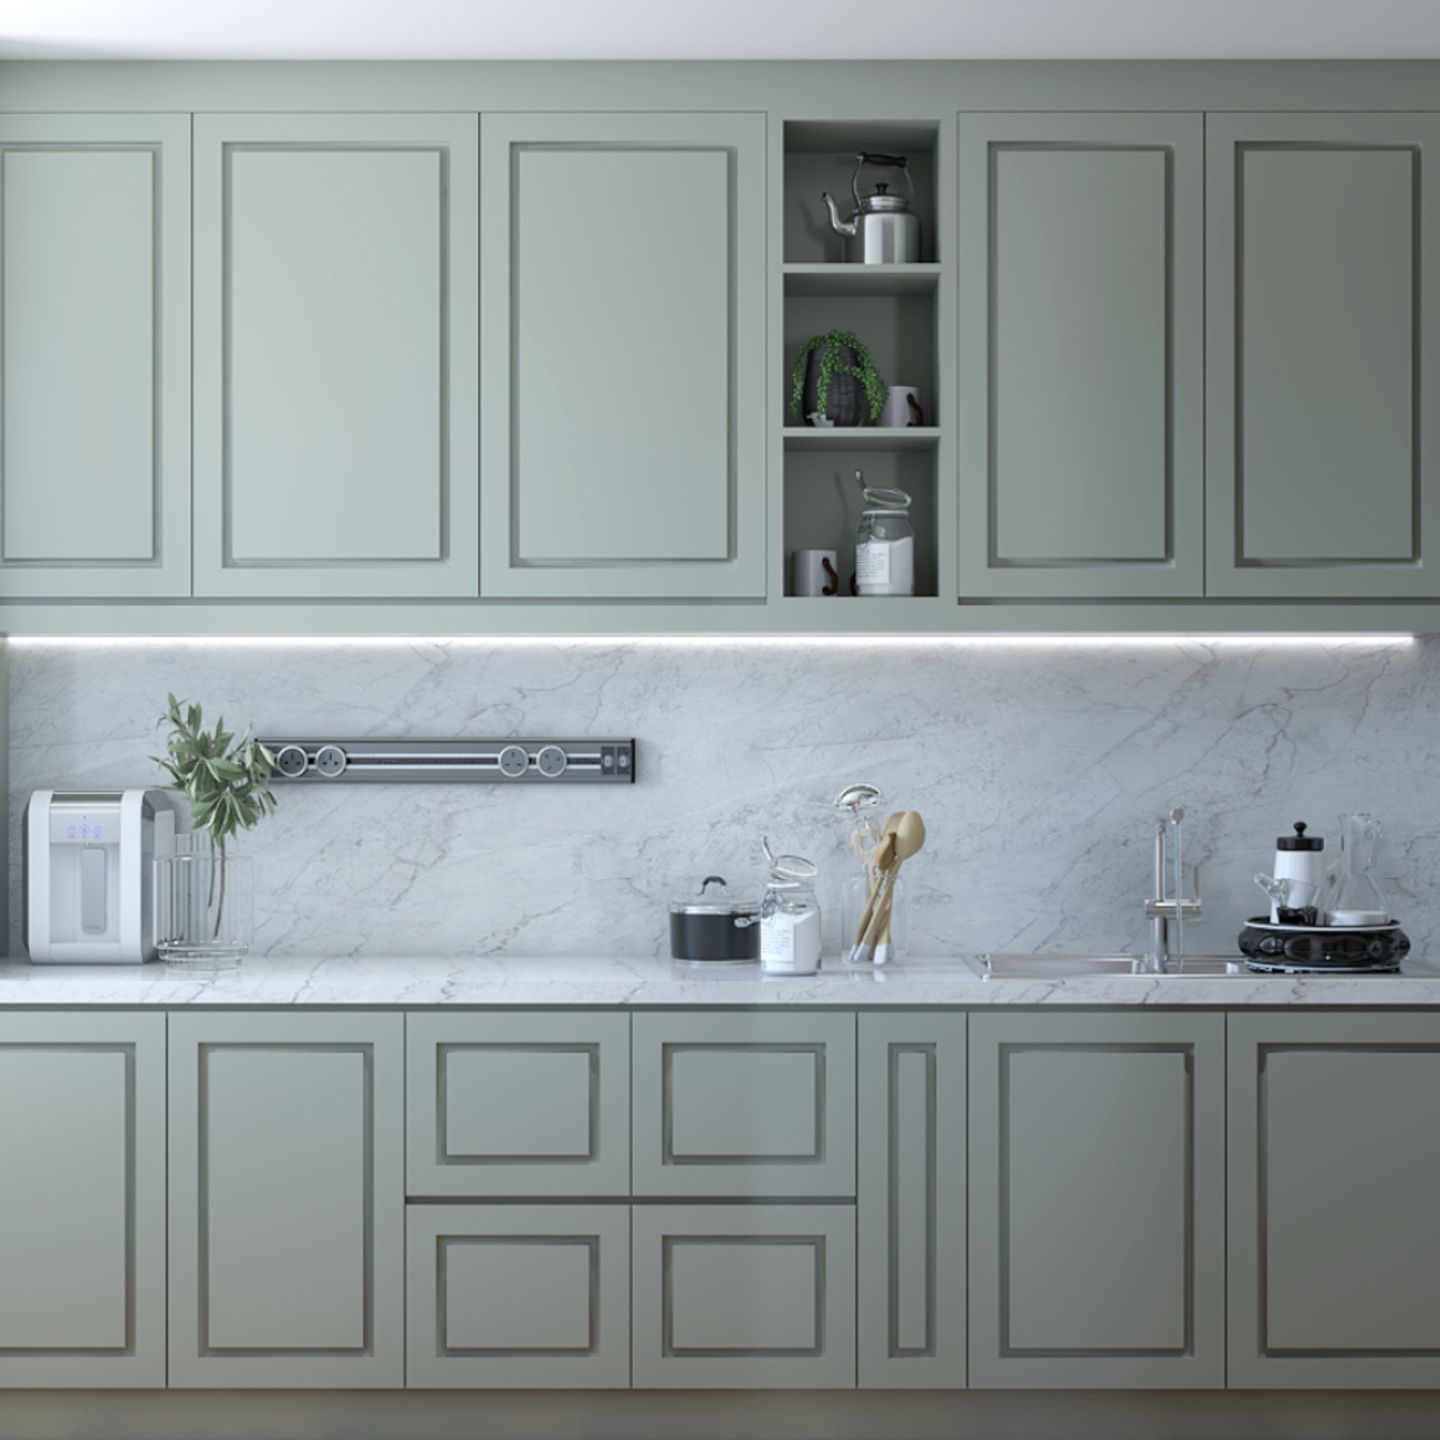 Glossy Marble Kitchen Tile Design In Light Grey - Livspace